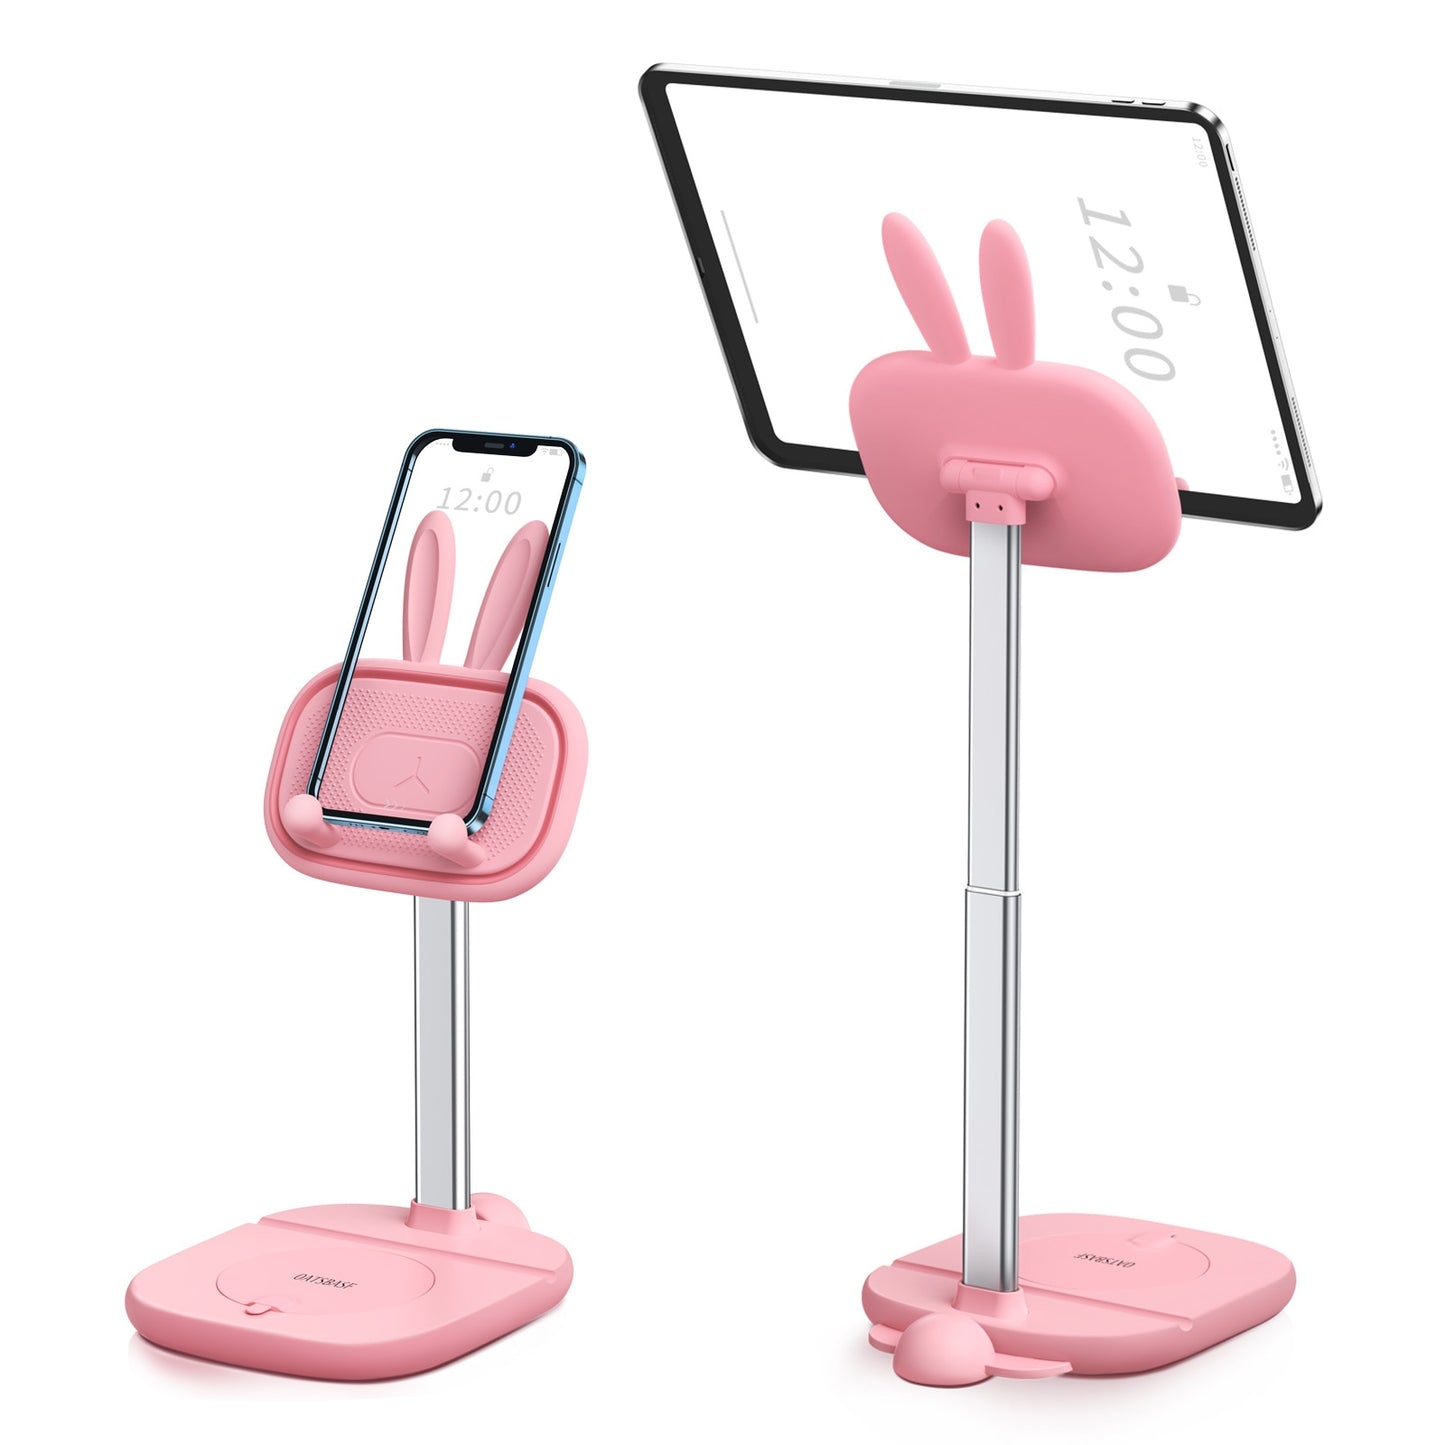 Kawaii Pink Bunny Phone & Tablet Stands